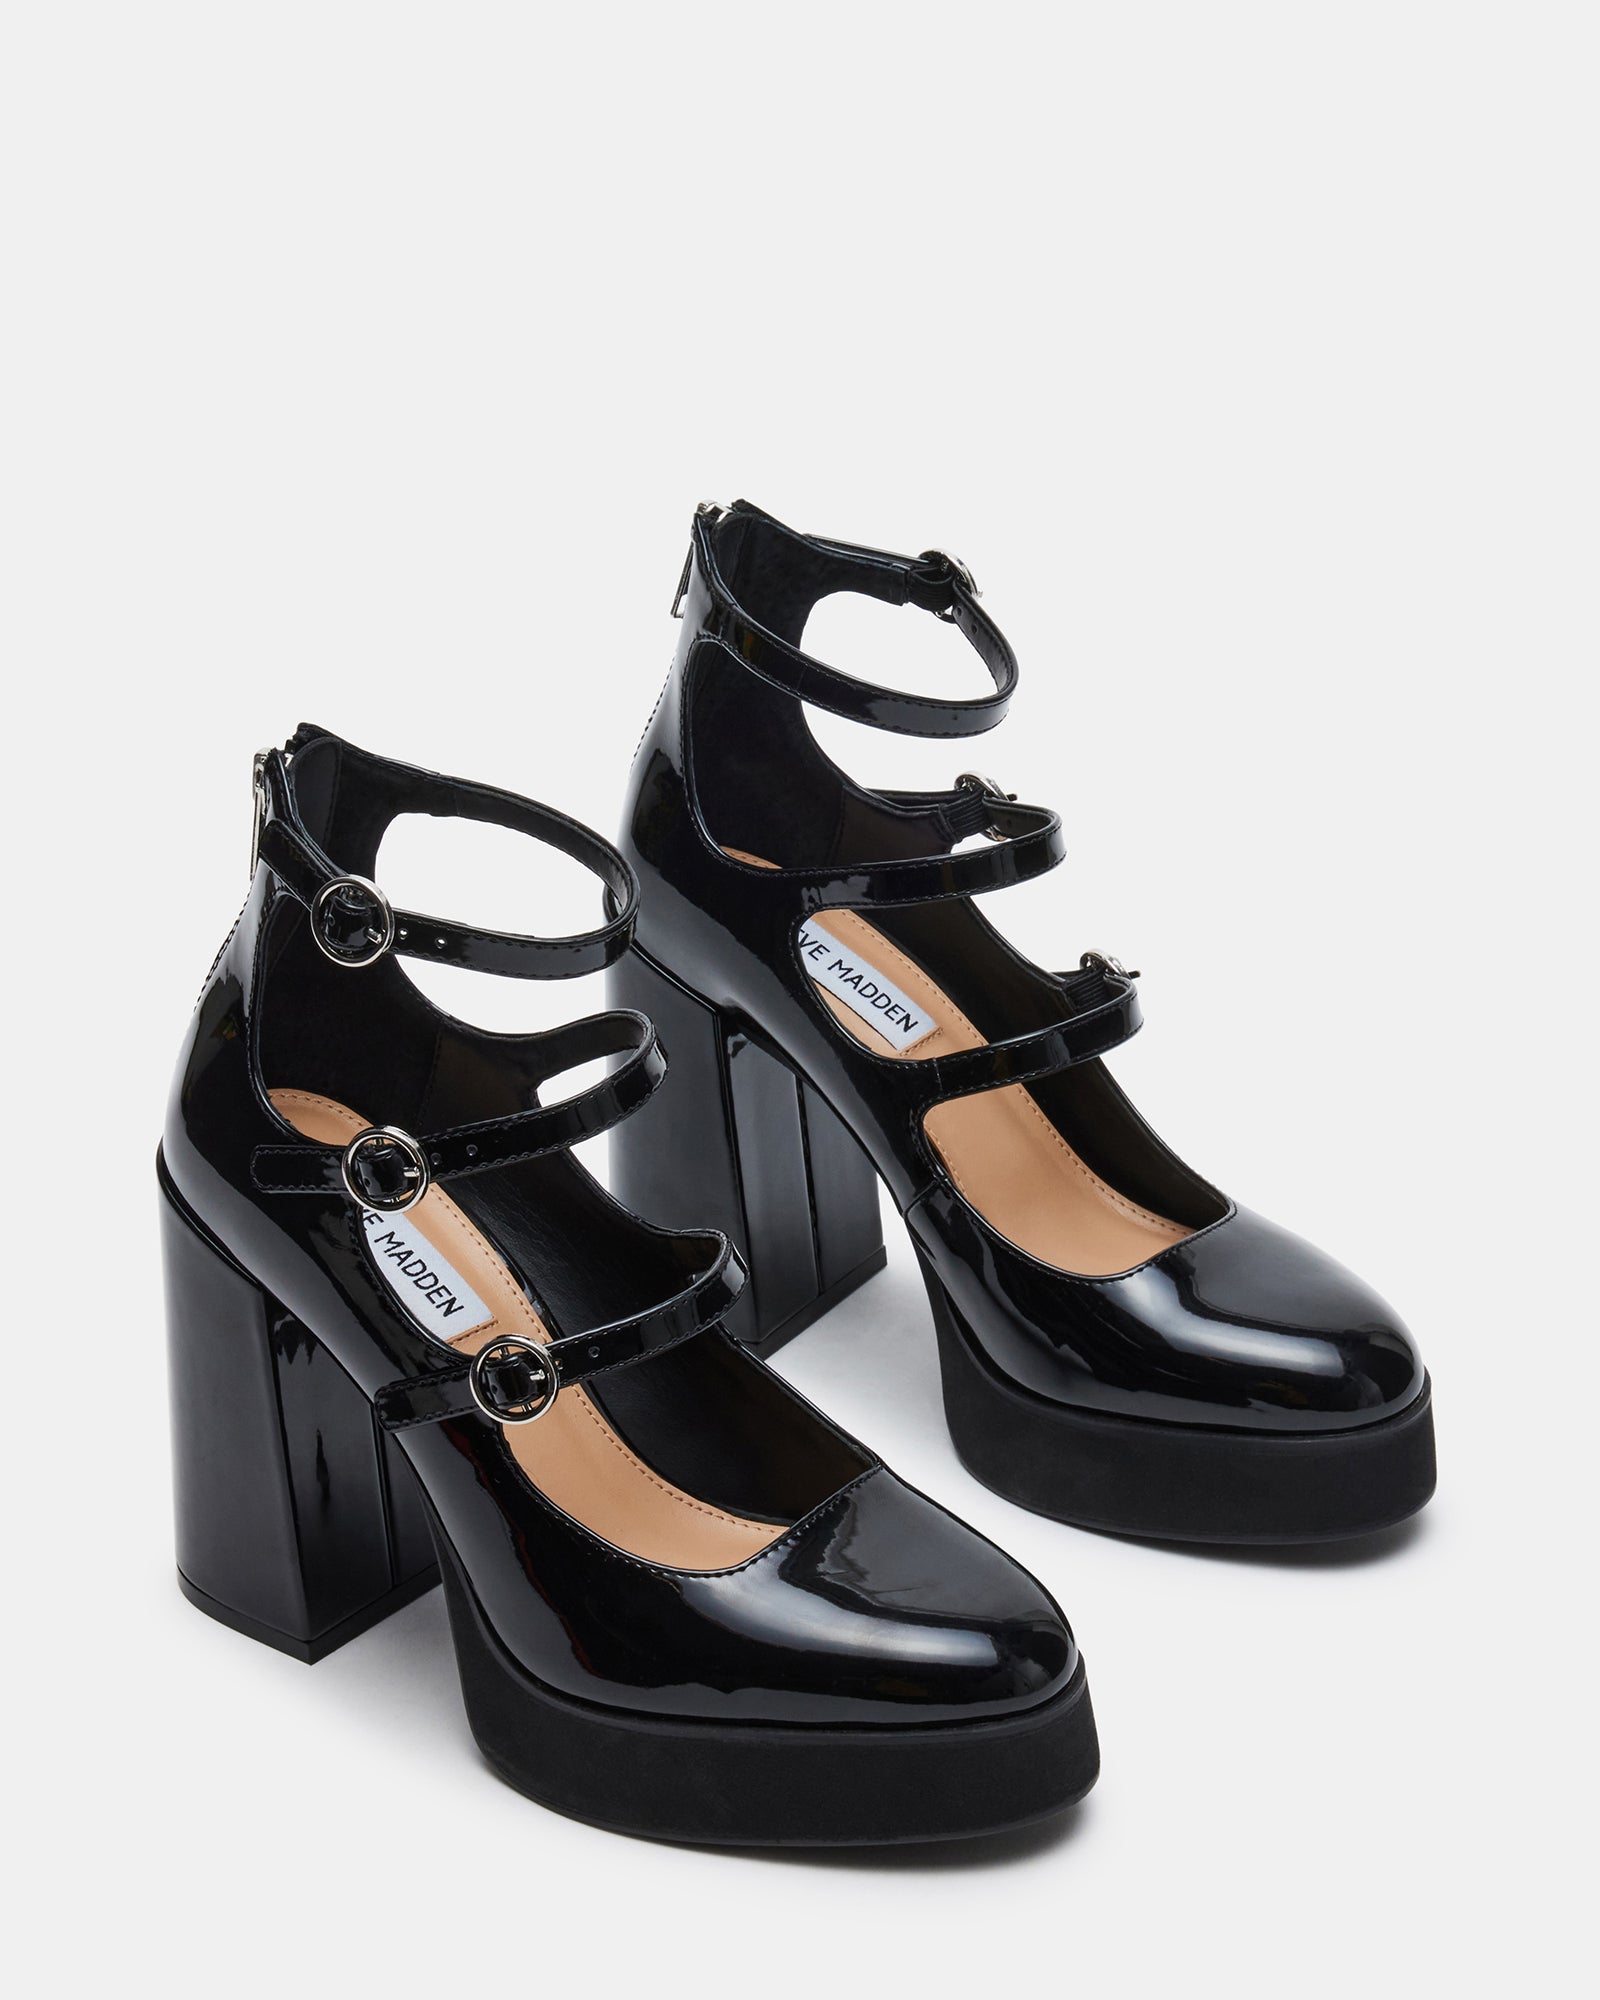 QUAD Black Patent Strappy Platform Mary Janes | Women's Heels – Steve ...